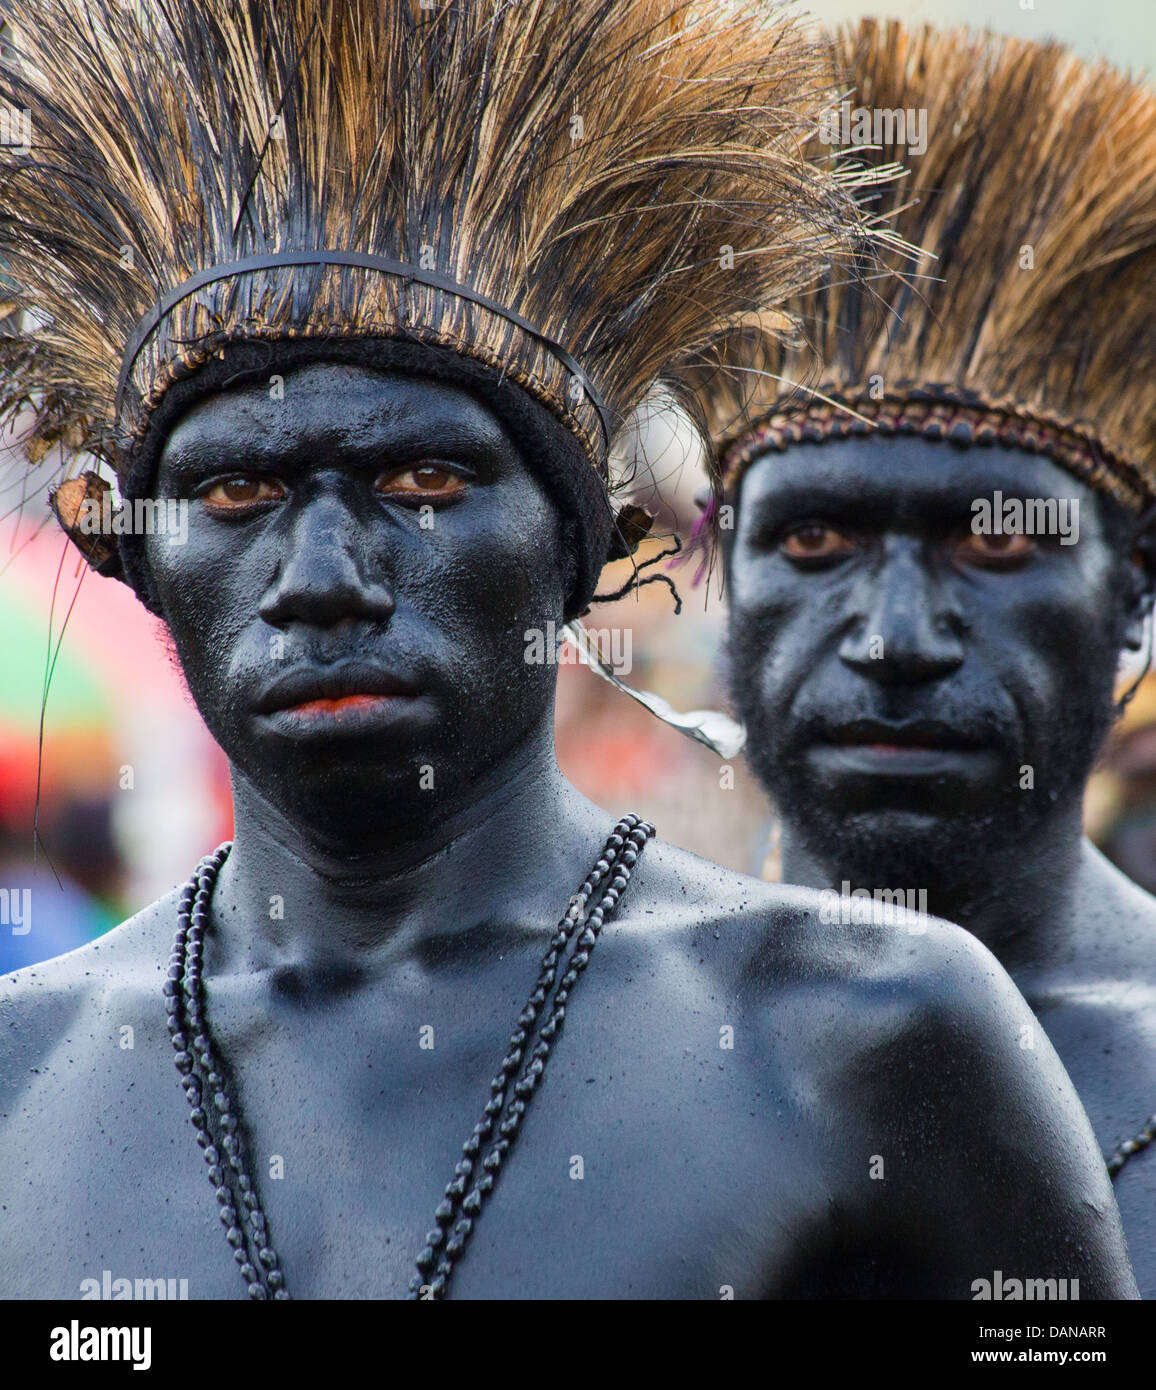 [Image: tribal-men-painted-shiny-black-and-weari...DANARR.jpg]